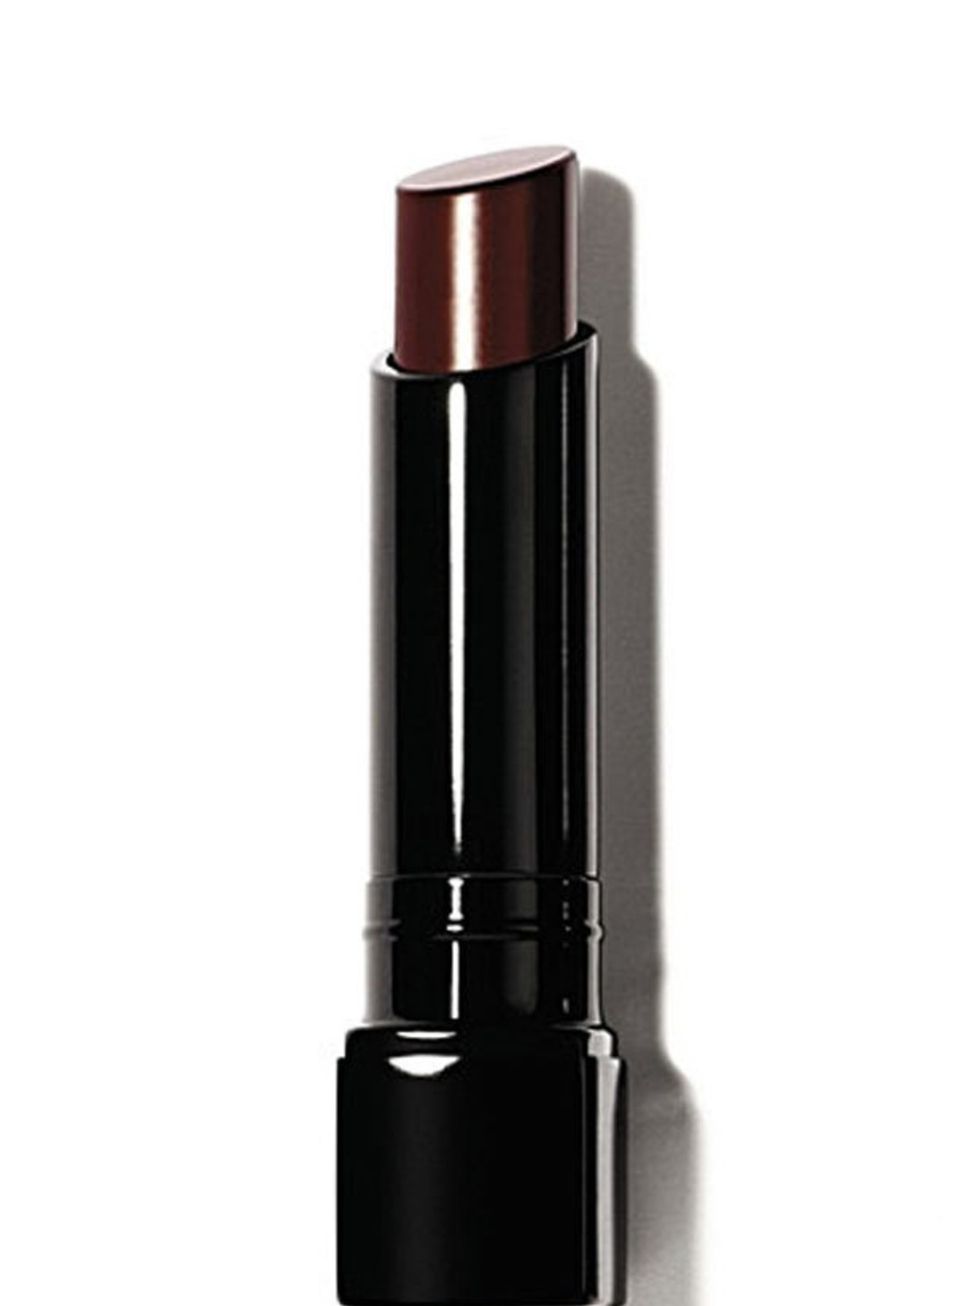 <p>Bobbi Brown creamy lip colour in Black Cherry, £16, at <a href="http://www.selfridges.com/en/Beauty/Brand-rooms/Designer/BOBBI-BROWN/Make-up/Lips/Creamy-lip-colour_299-85076589-E4FG/">Selfridges</a></p>